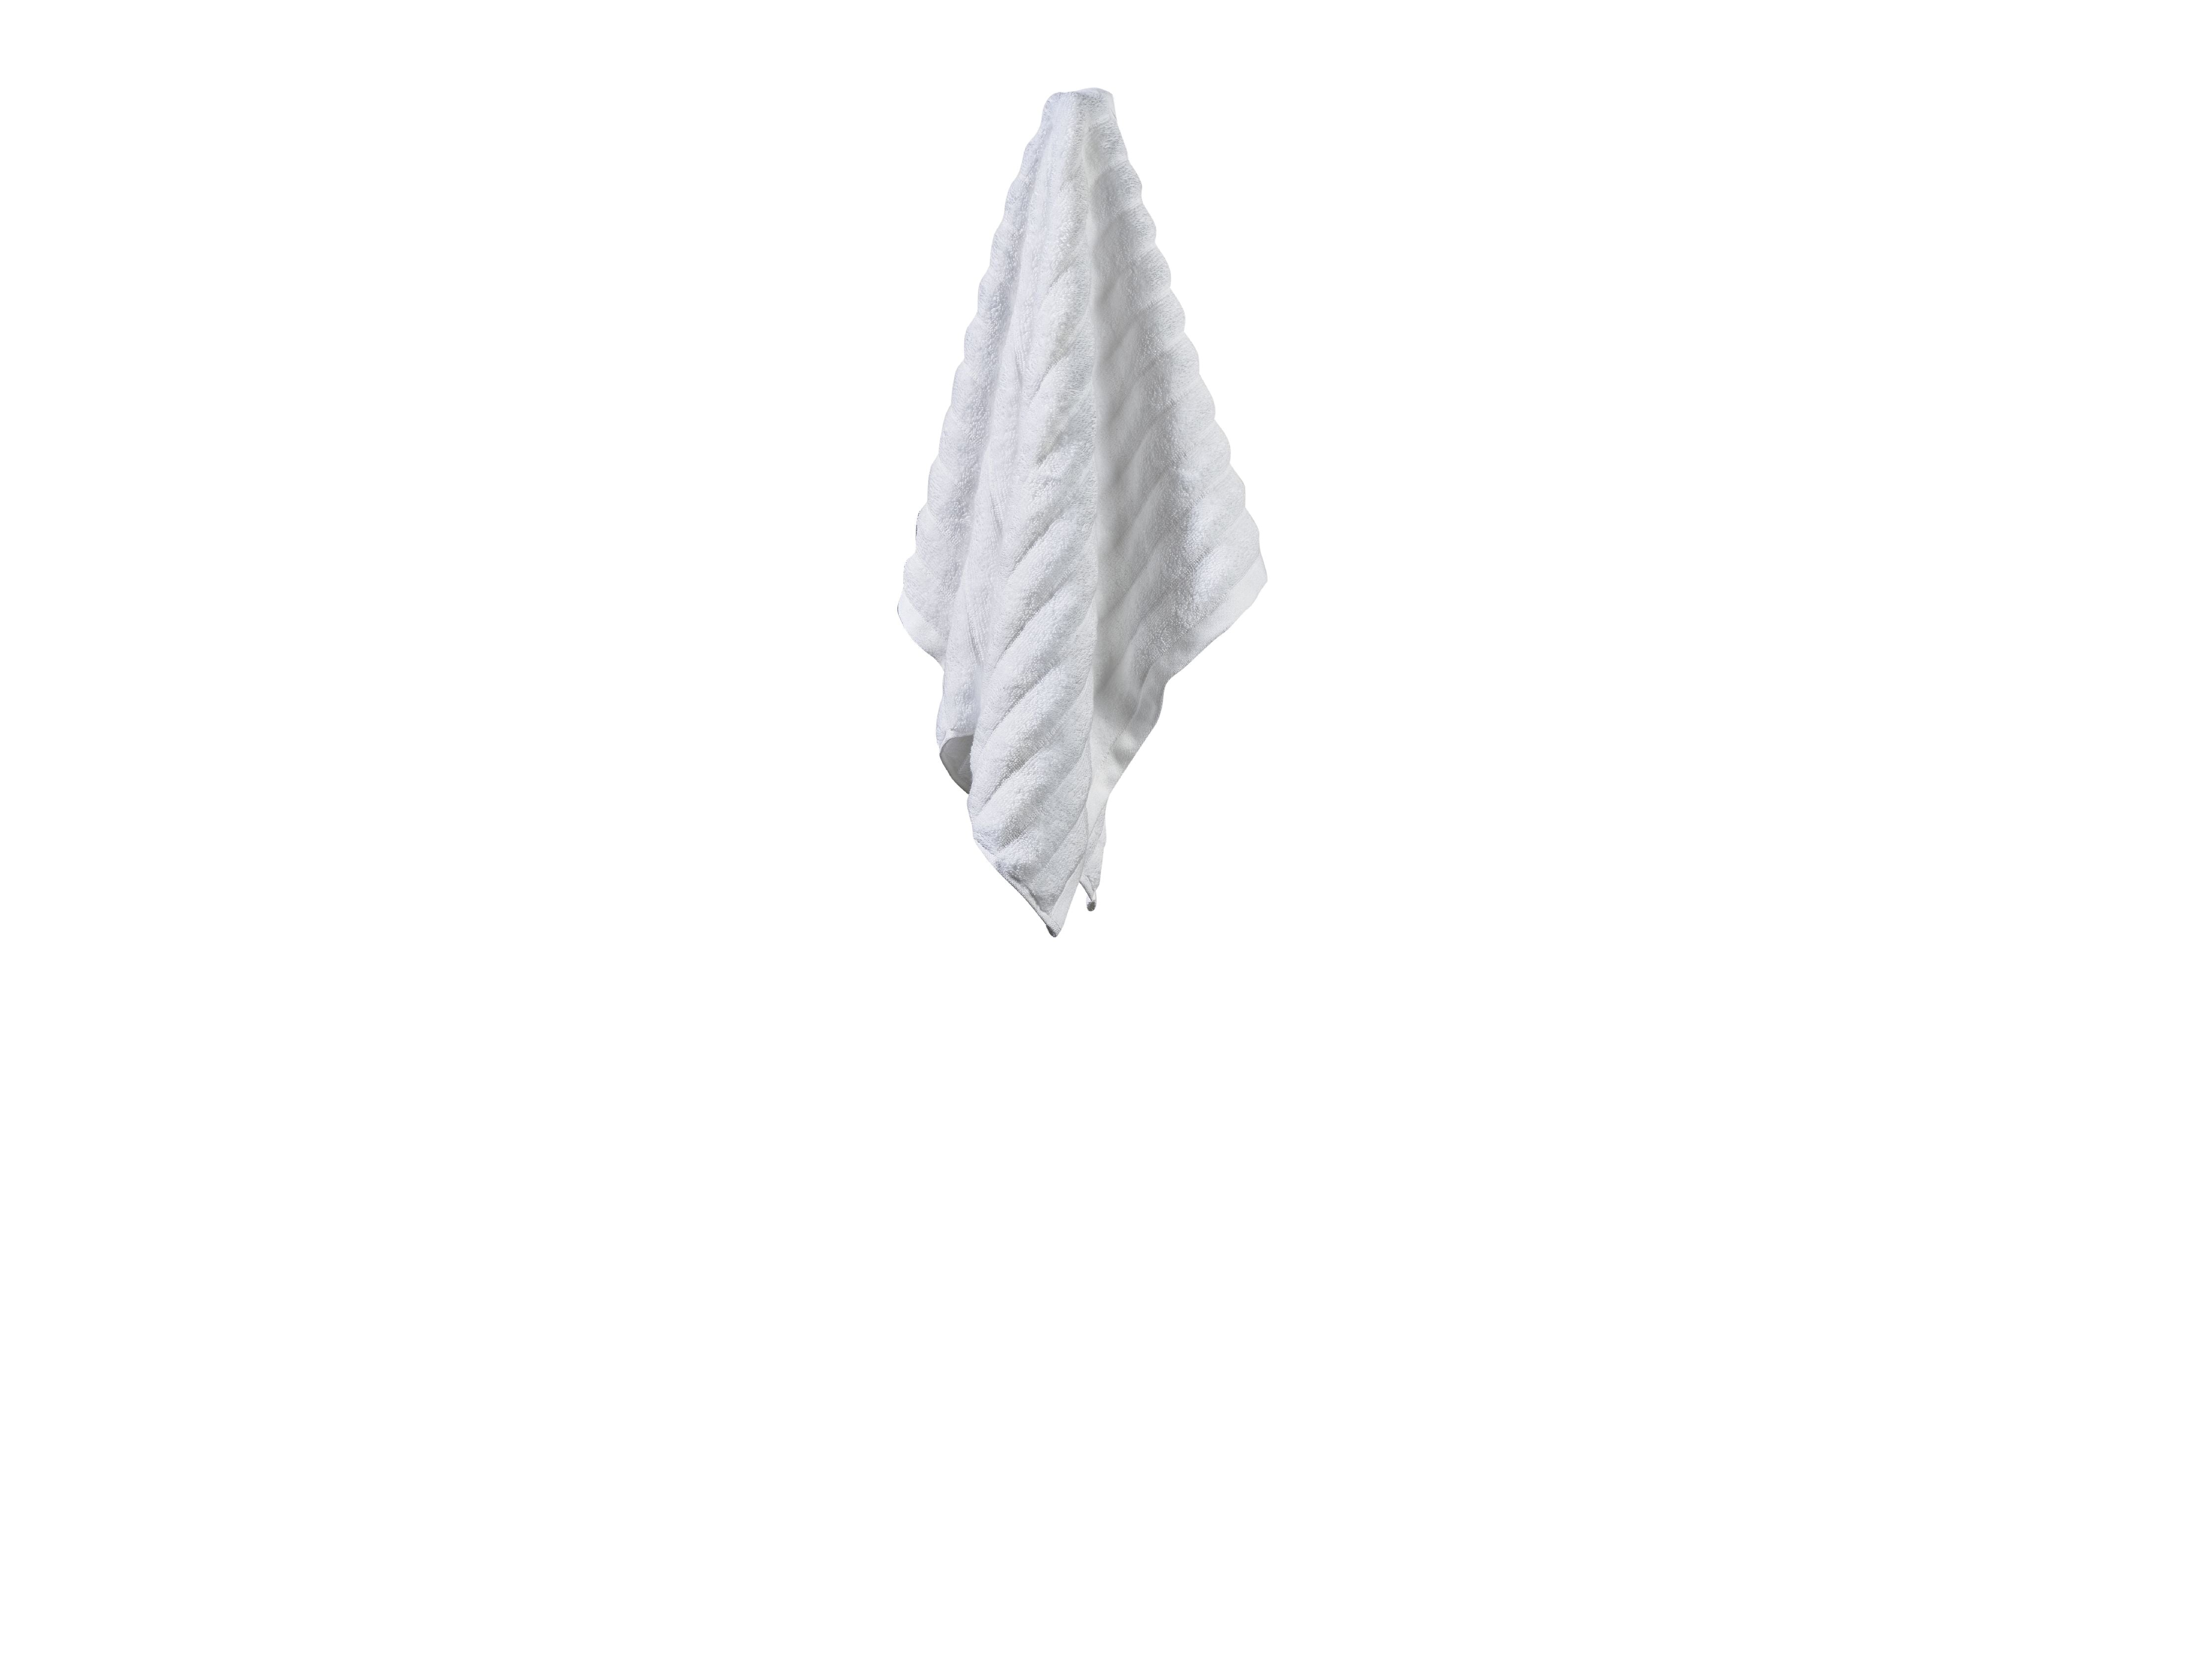 Zone Danemark INU serviette 70x50 cm, blanc